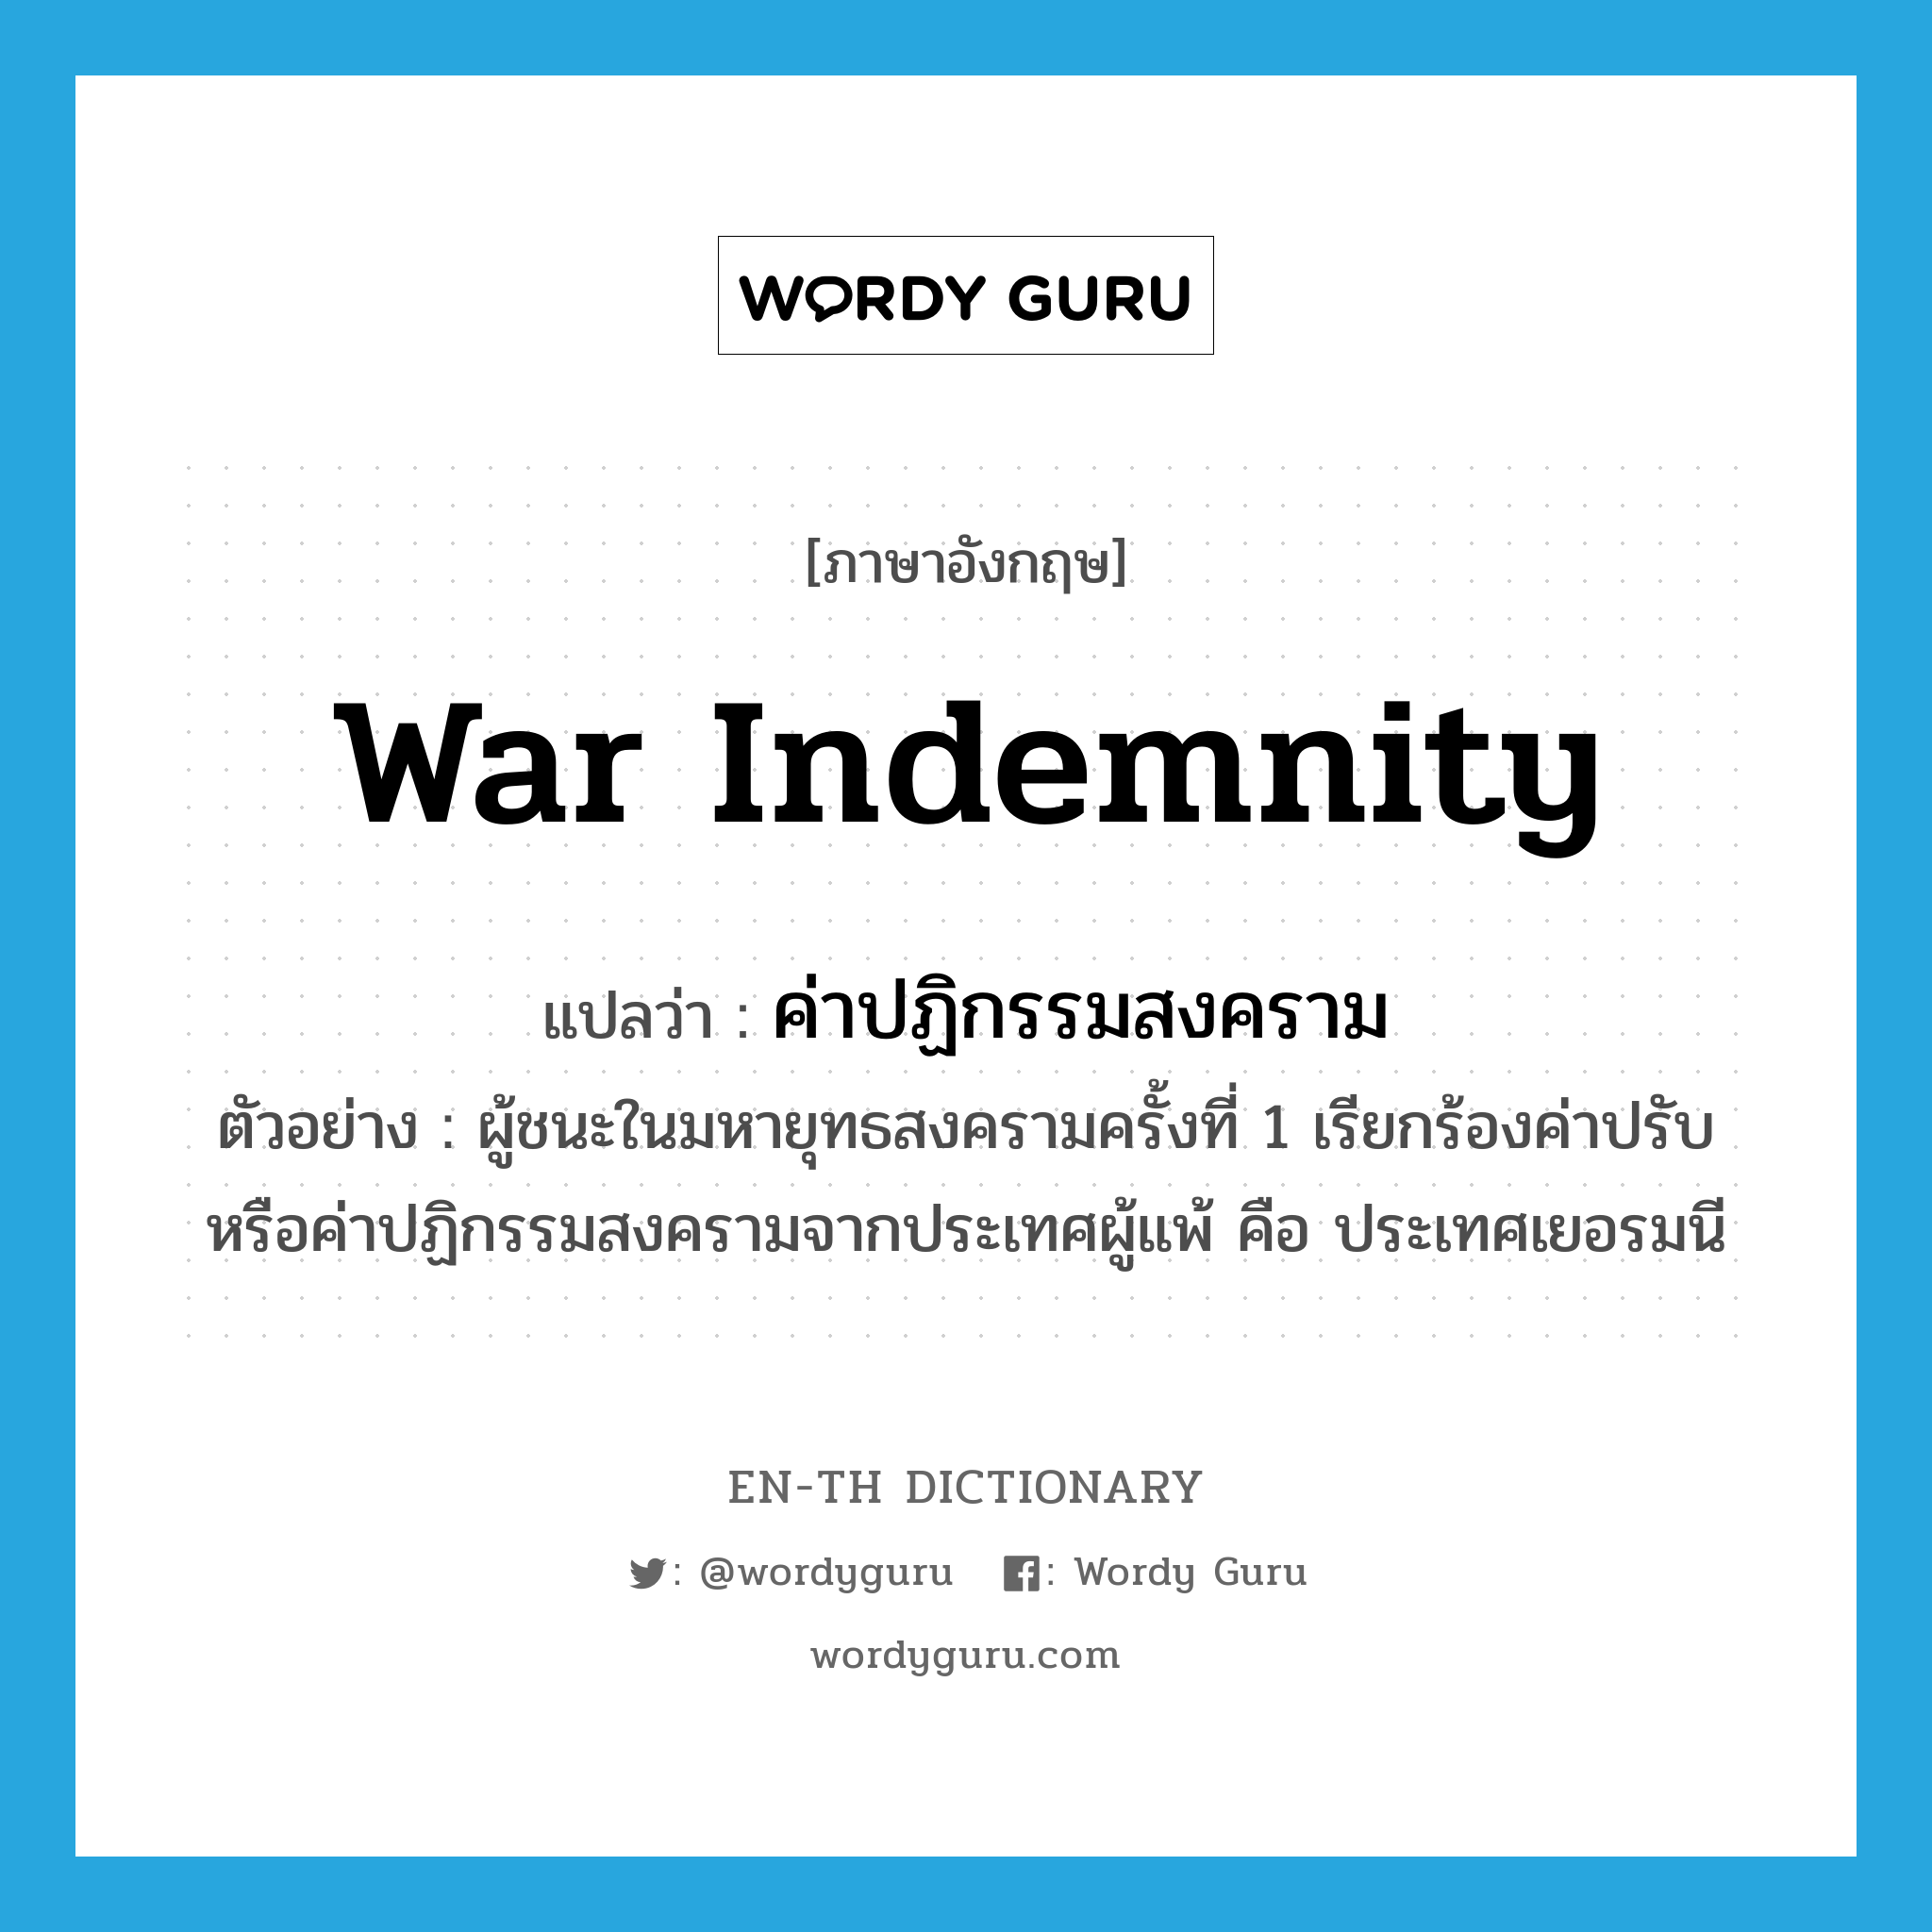 war indemnity แปลว่า?, คำศัพท์ภาษาอังกฤษ war indemnity แปลว่า ค่าปฏิกรรมสงคราม ประเภท N ตัวอย่าง ผู้ชนะในมหายุทธสงครามครั้งที่ 1 เรียกร้องค่าปรับหรือค่าปฏิกรรมสงครามจากประเทศผู้แพ้ คือ ประเทศเยอรมนี หมวด N